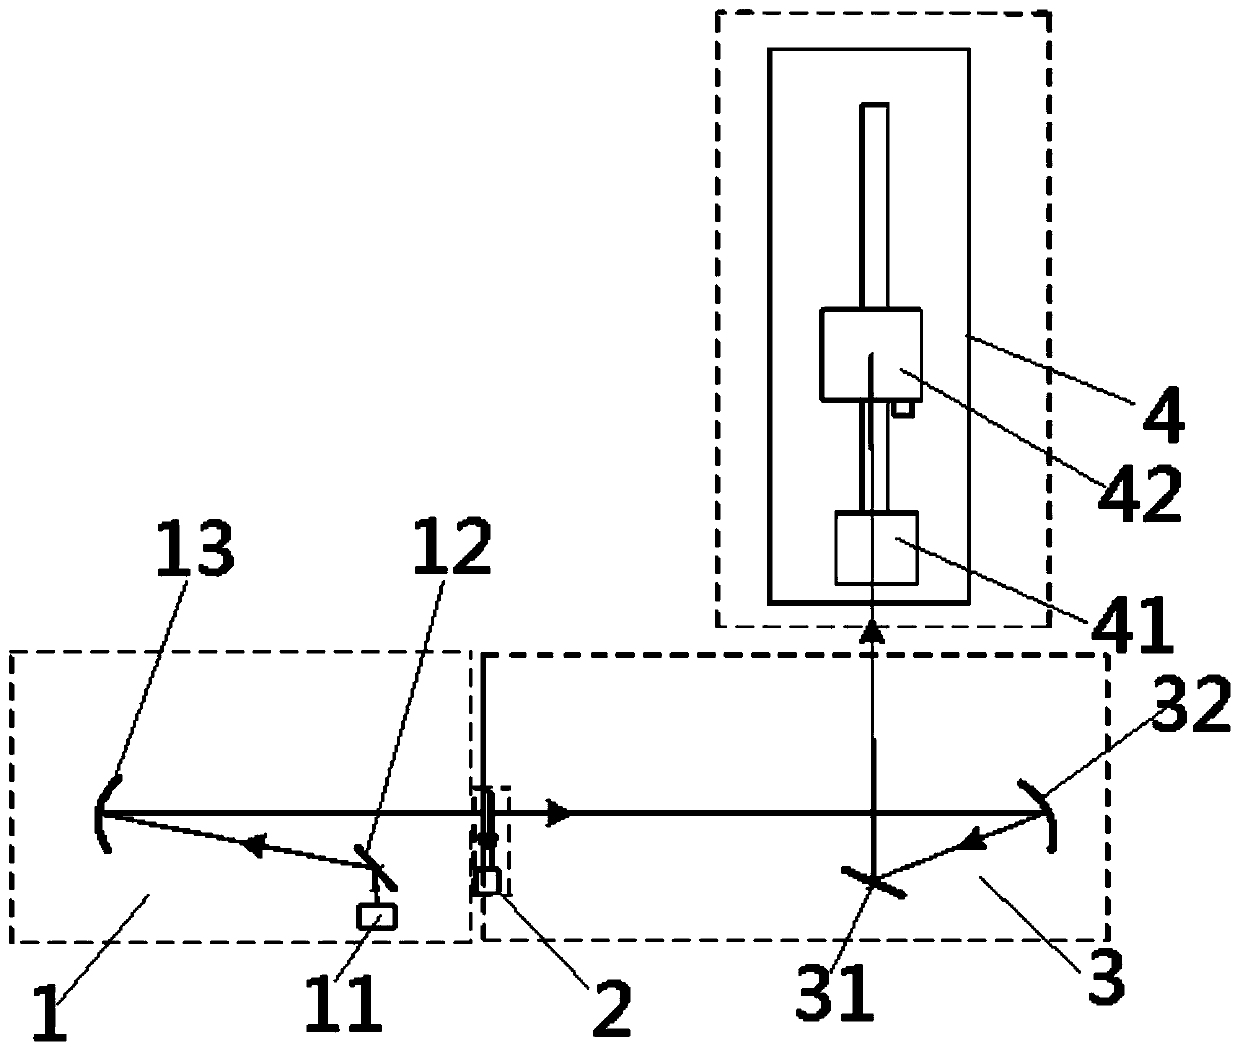 Geometric calibration device of push-broom type imaging spectrometer